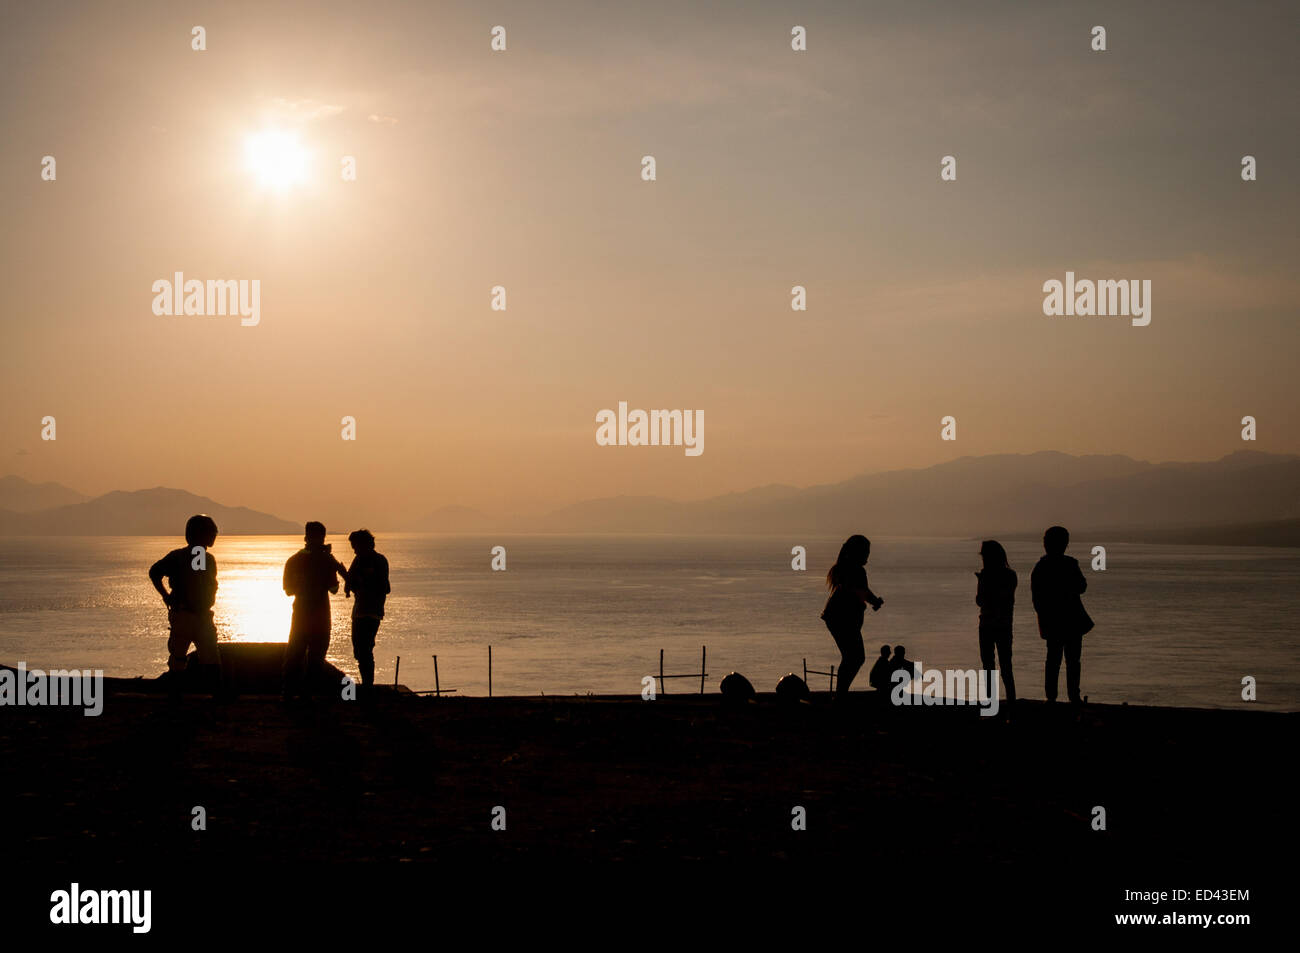 People are enjoying recreational time before sunset at a public recreational space in Waijarang, Lembata, East Nusa Tenggara, Indonesia. Stock Photo